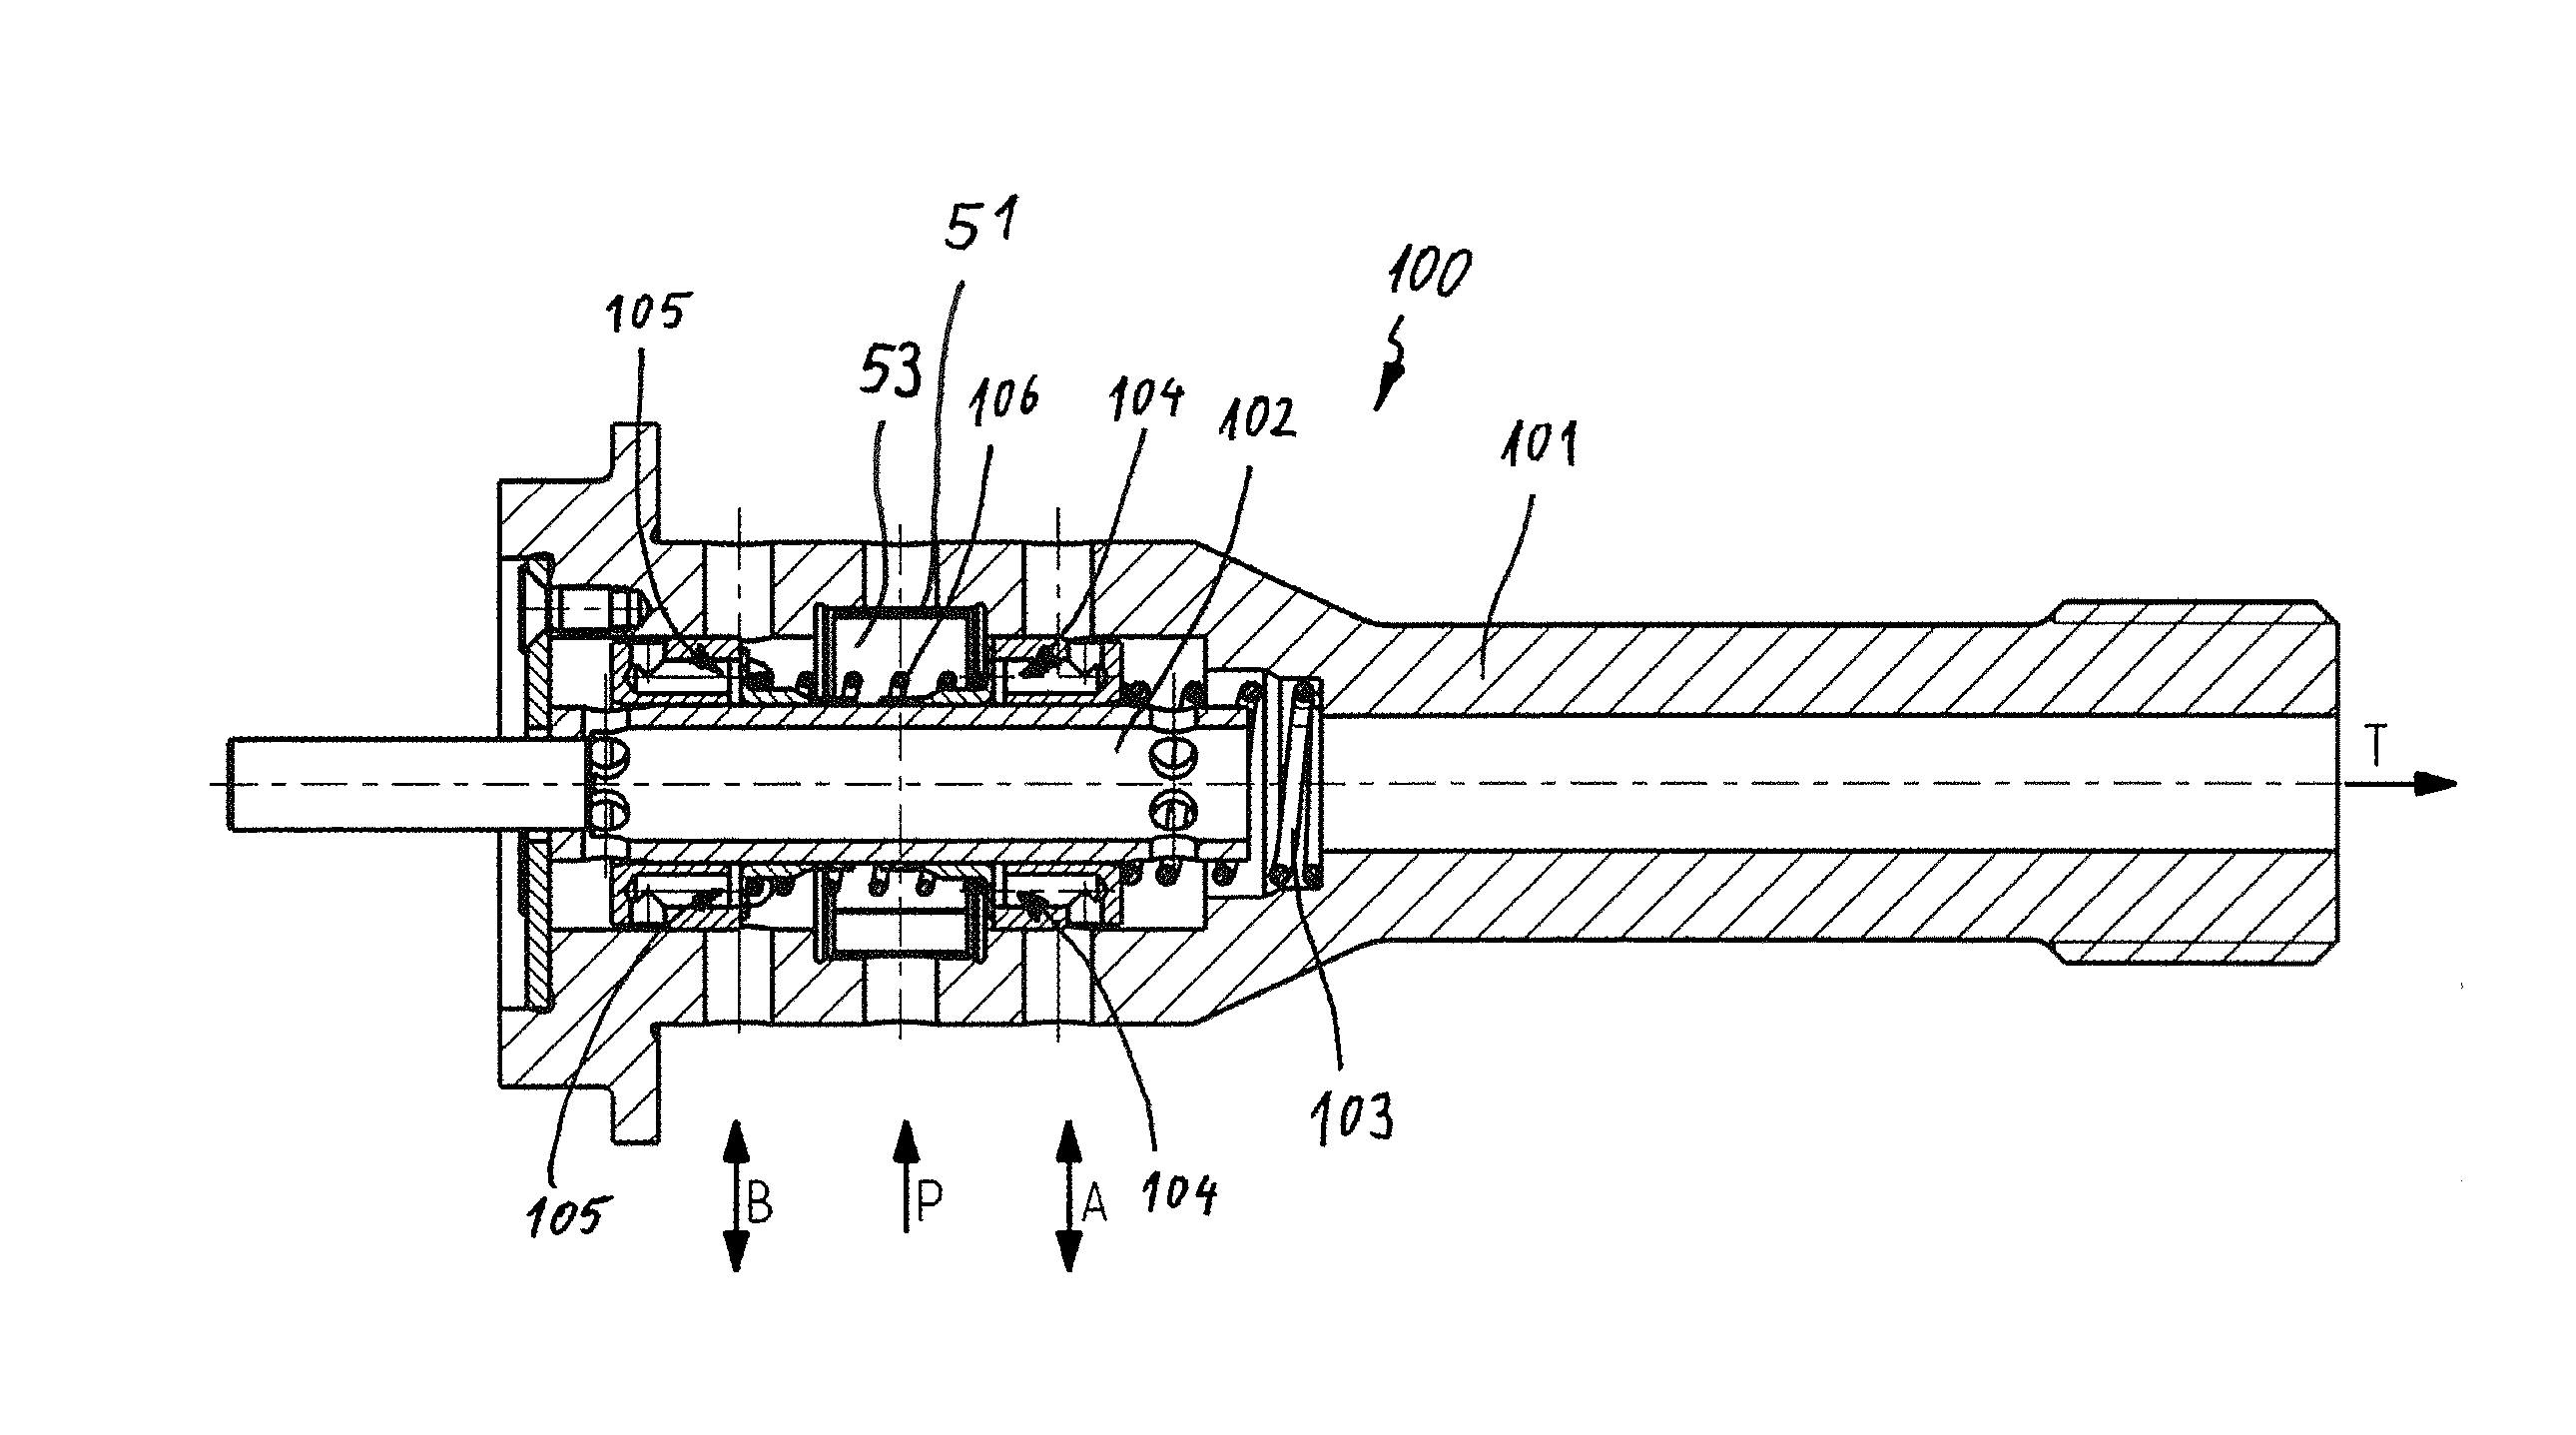 Central valve for pivot motor actuator